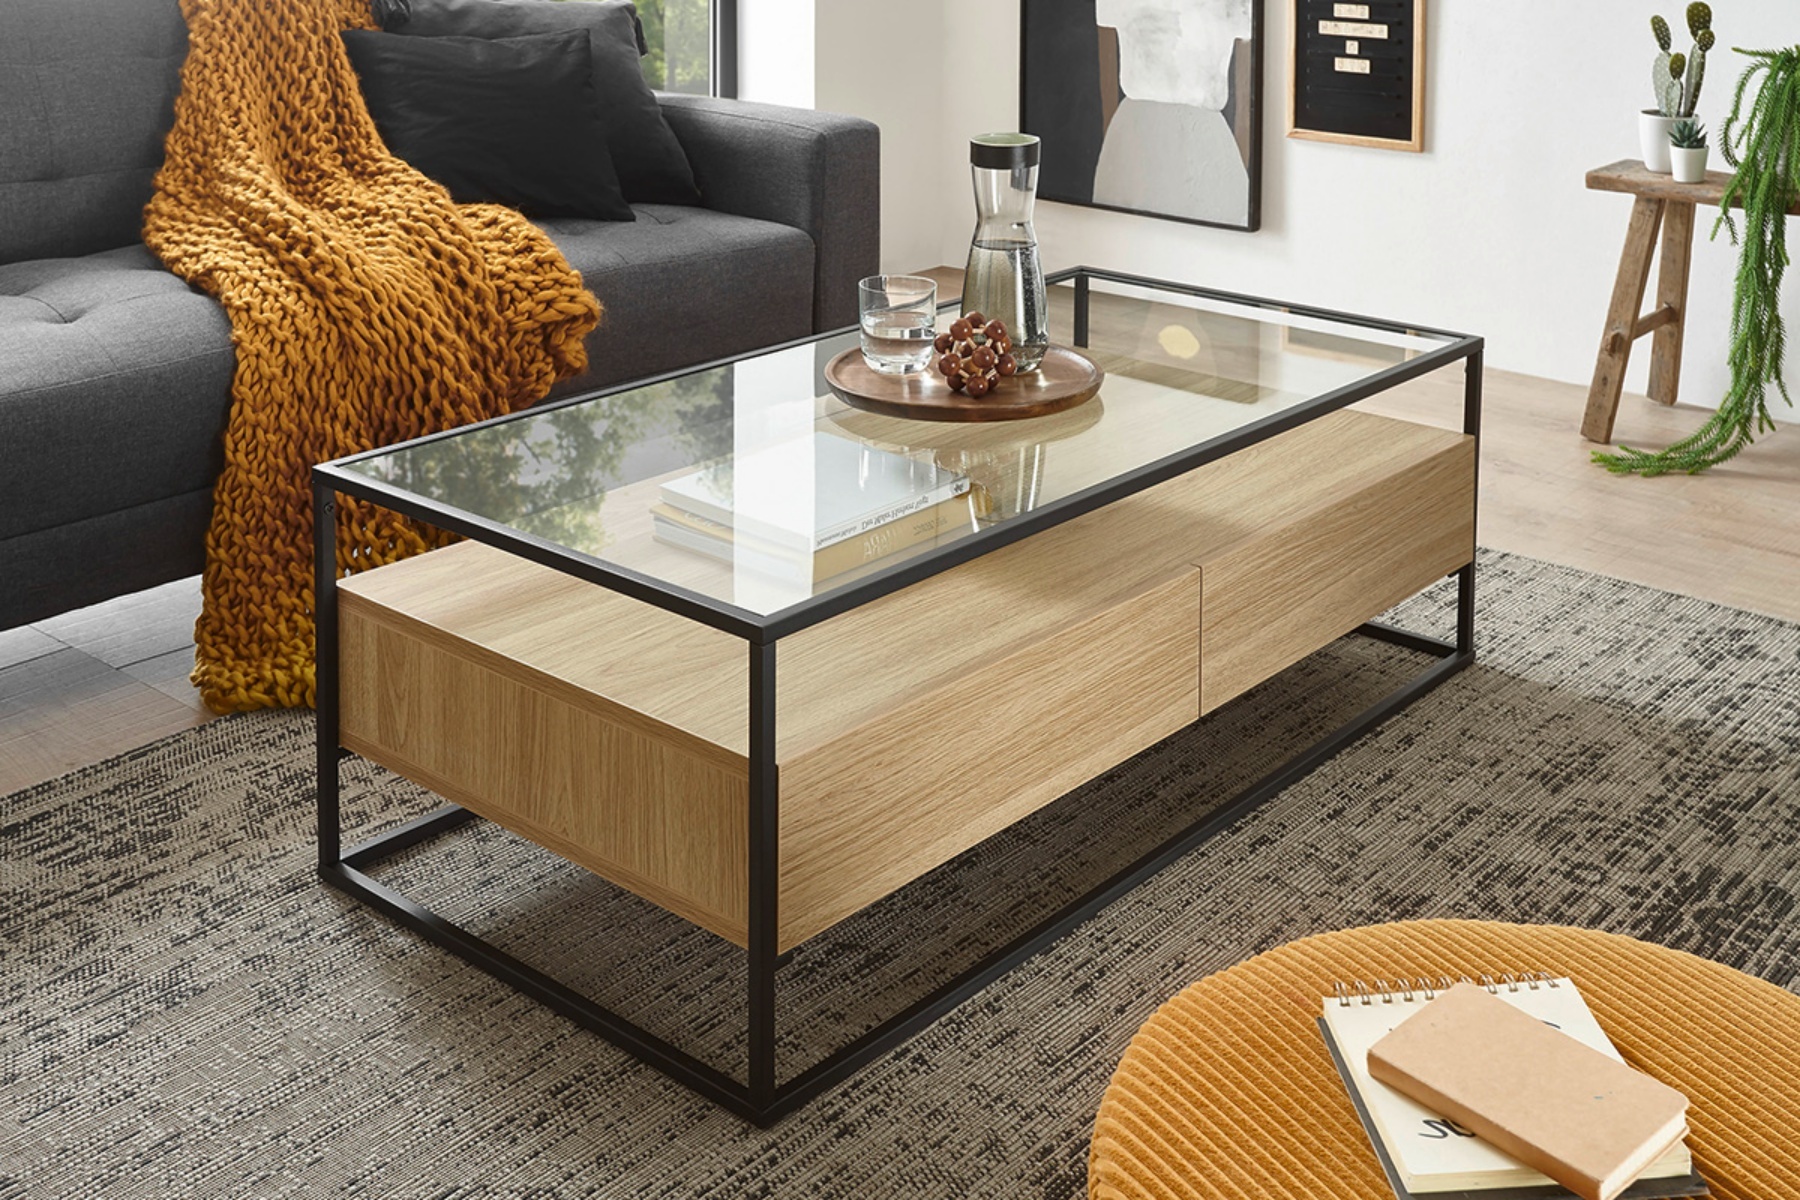 Table basse Pagittles 120x60 cm avec deux tiroirs chêne mat